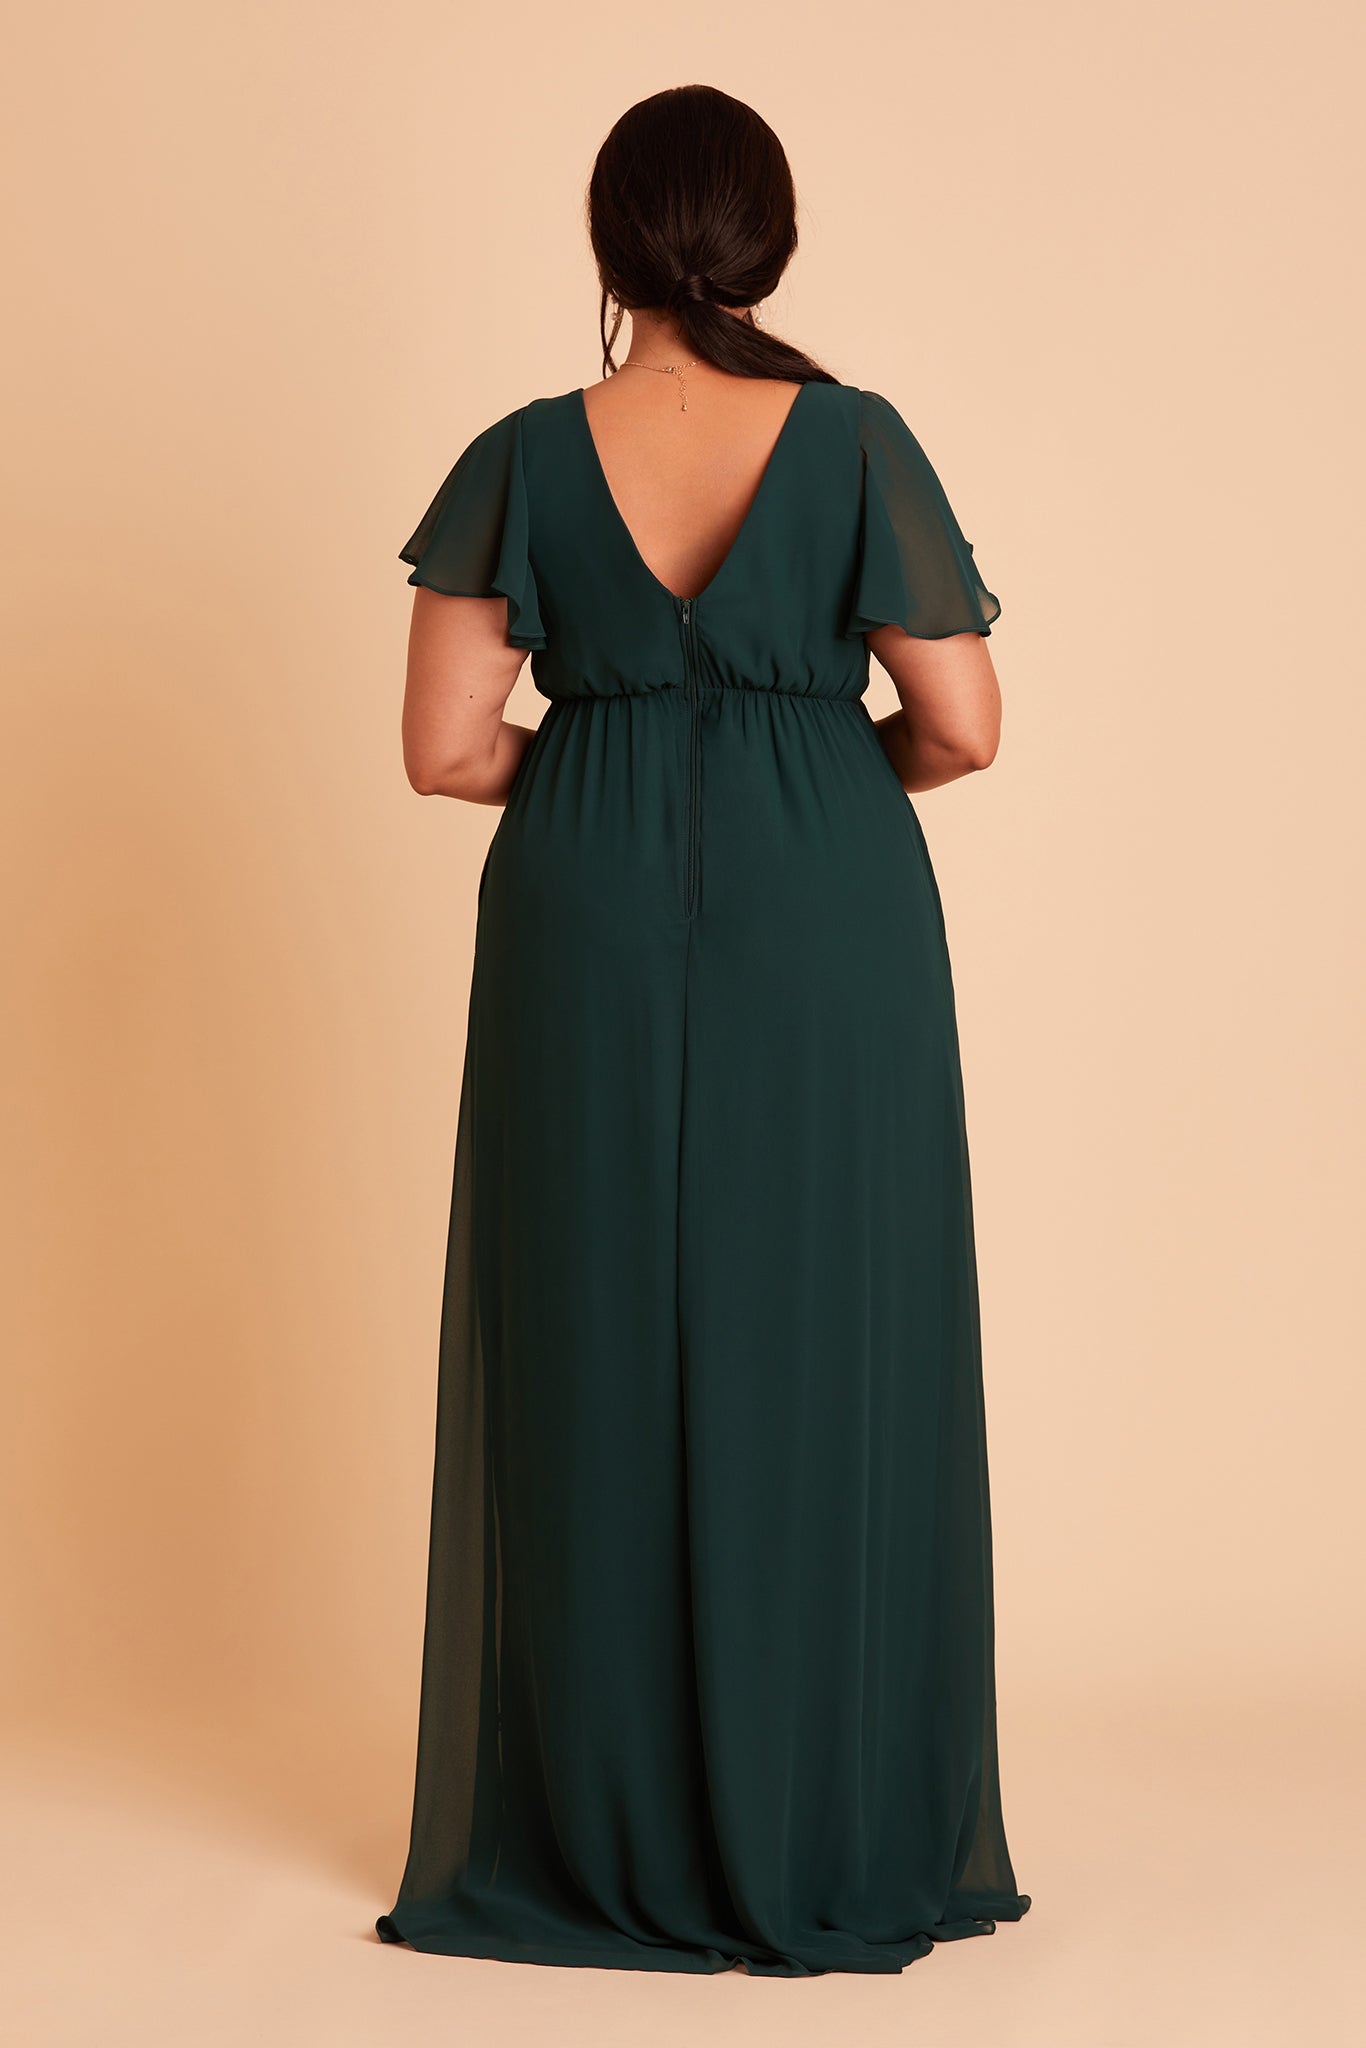 Hannah empire plus size bridesmaid dress in emerald chiffon by Birdy Grey, back view